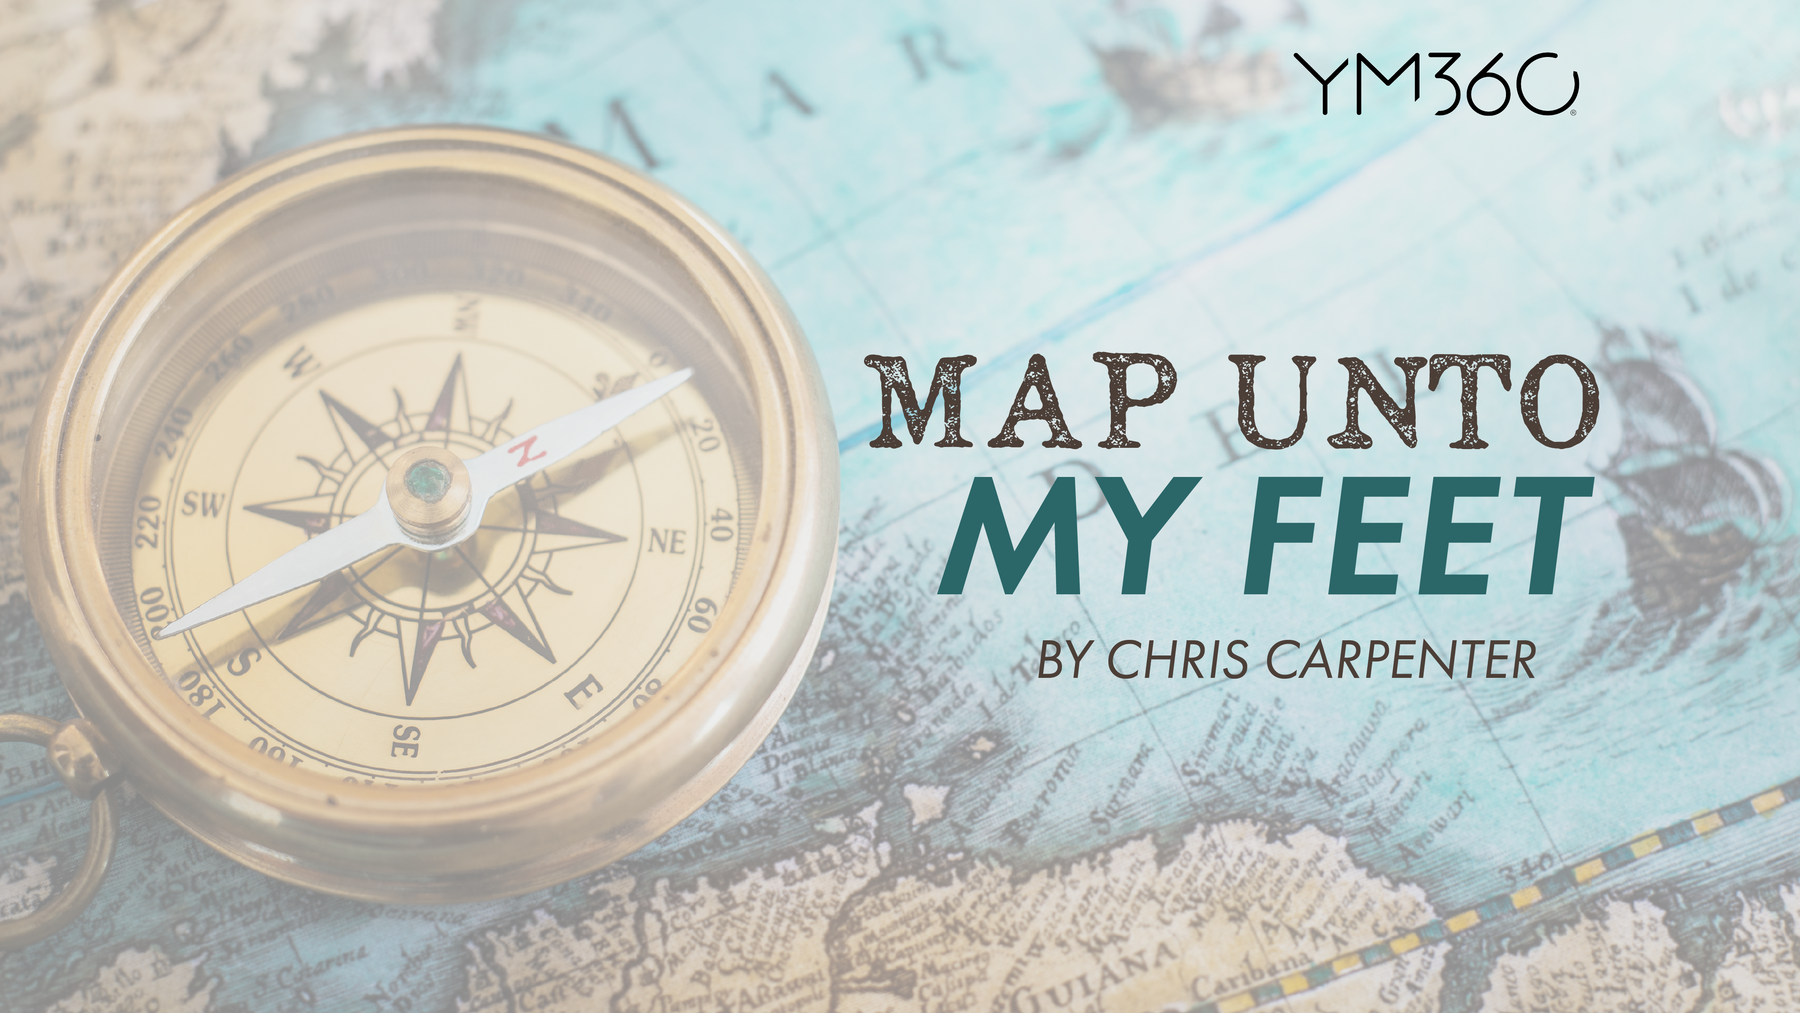 A Map Unto My Feet